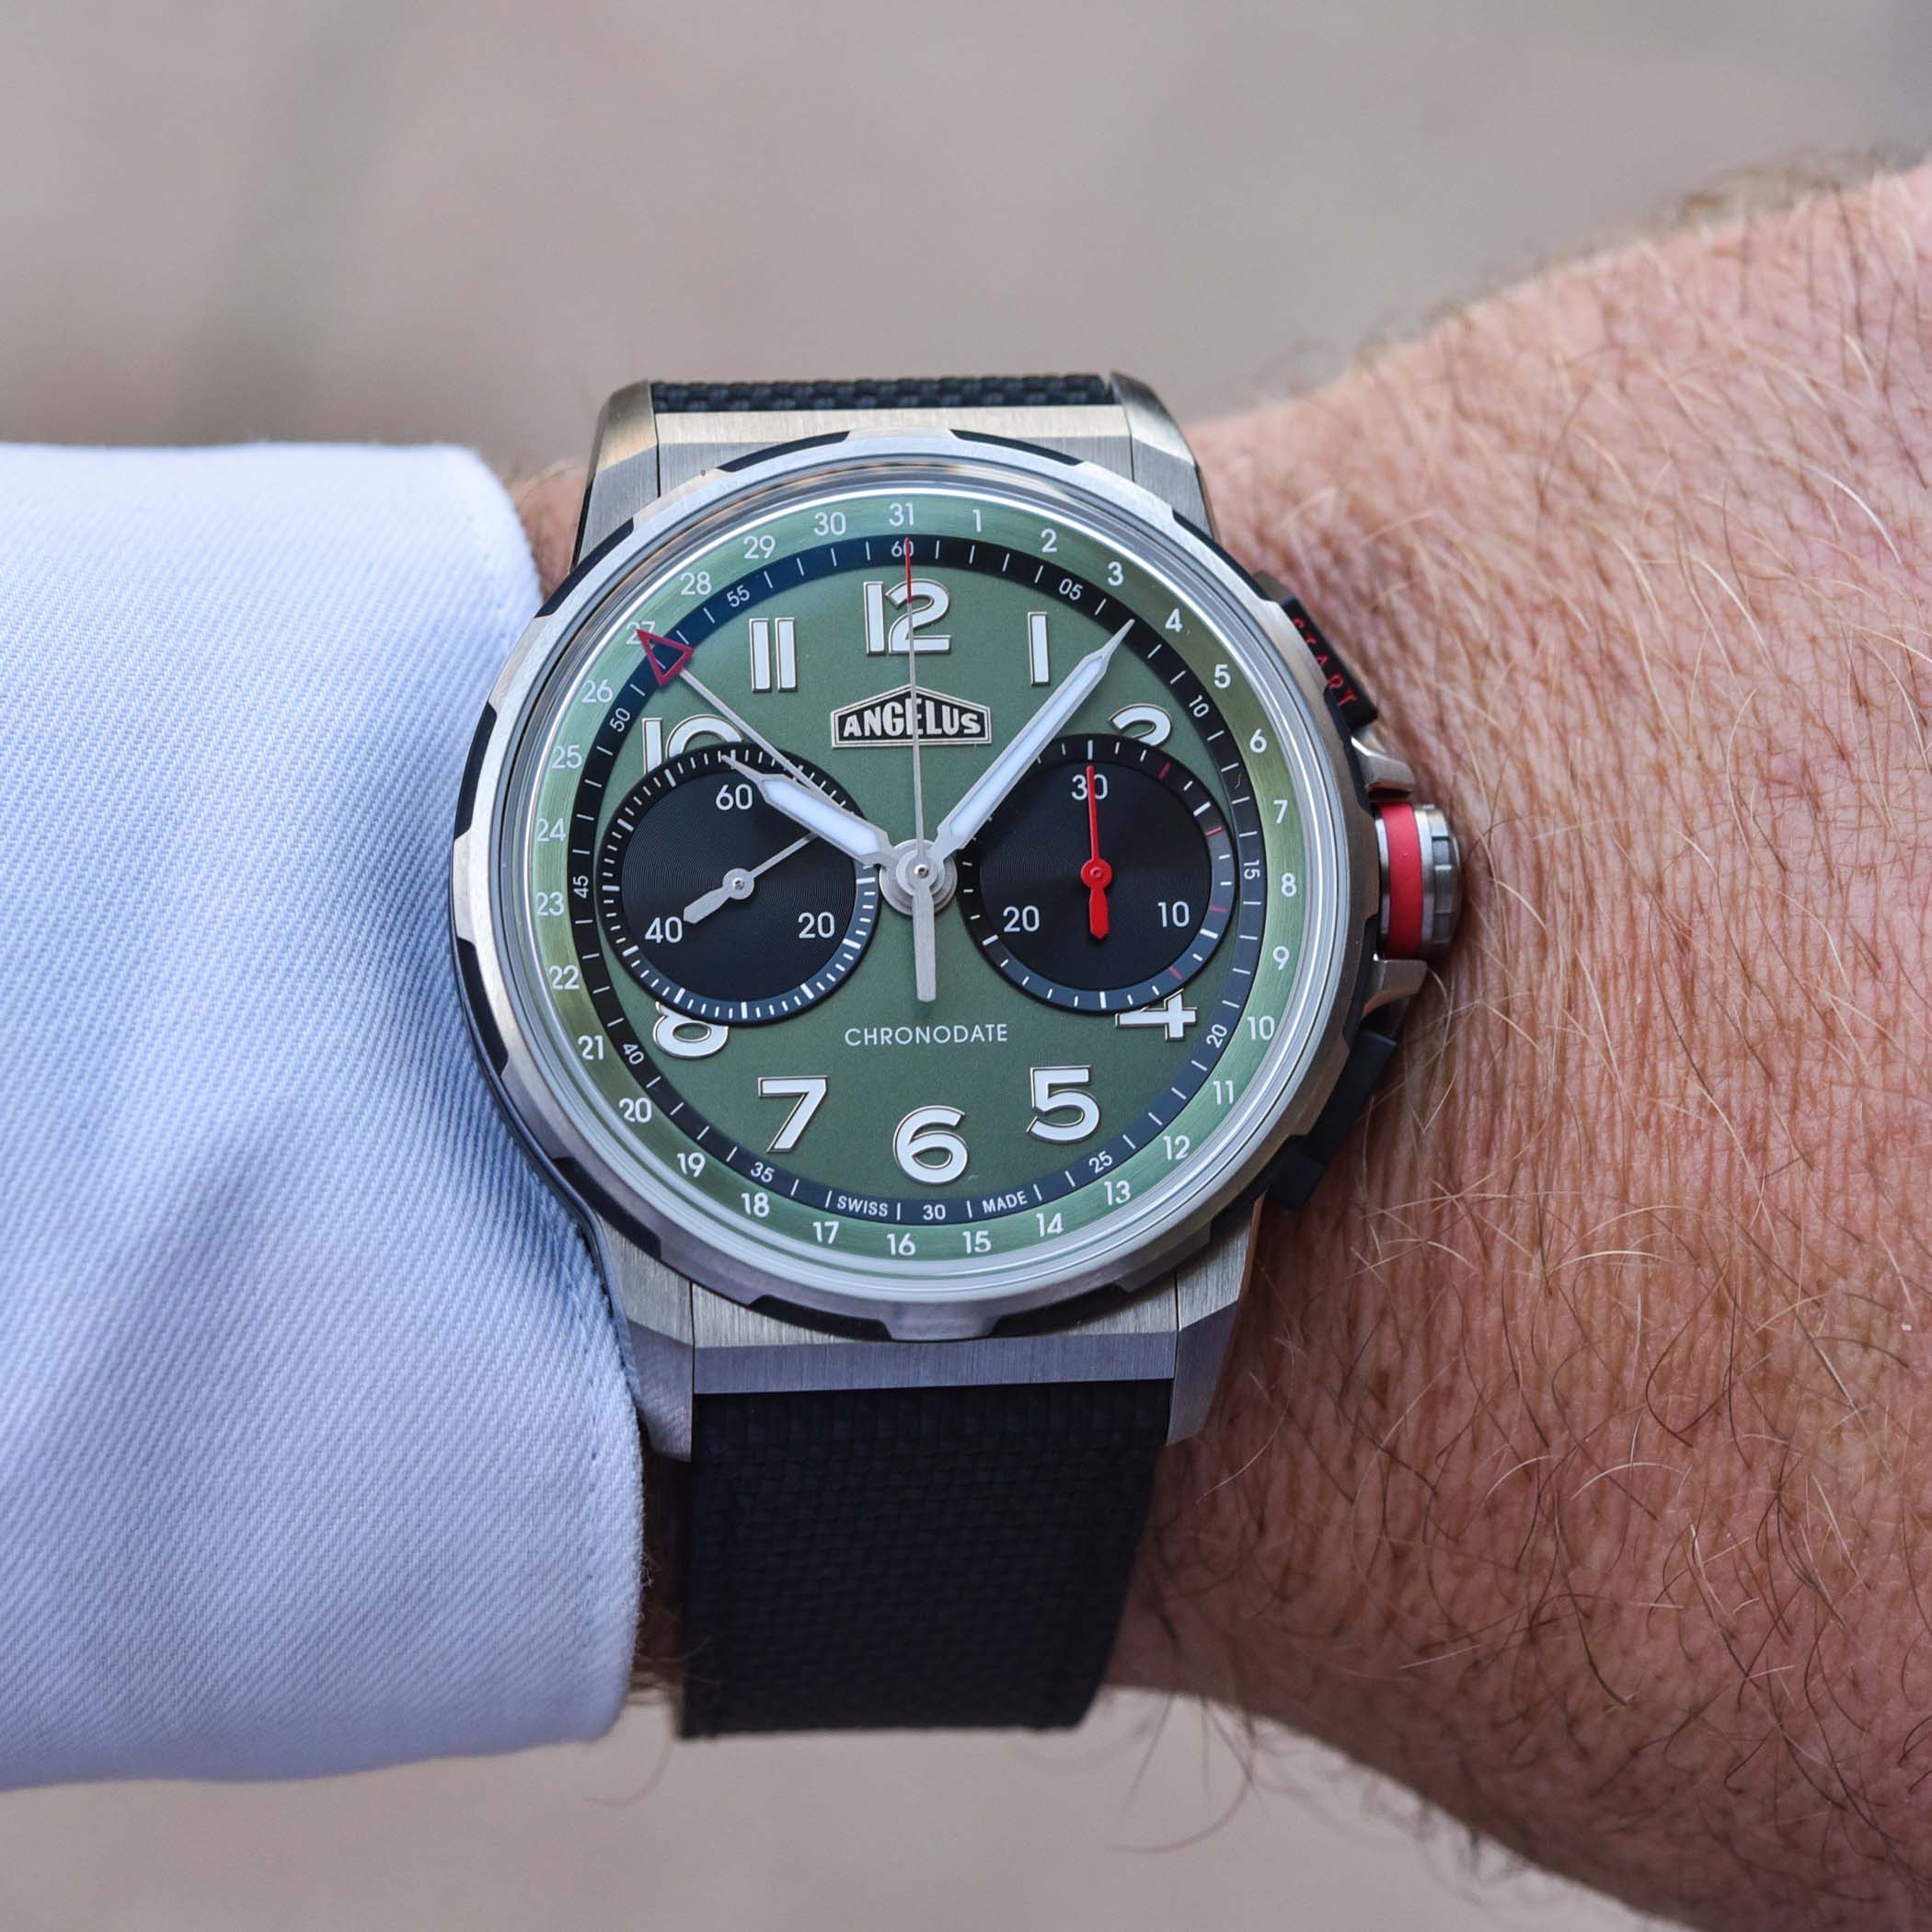 NEw Editions Angelus Chronodate - titanium bracelet fern green dial - video review - 12